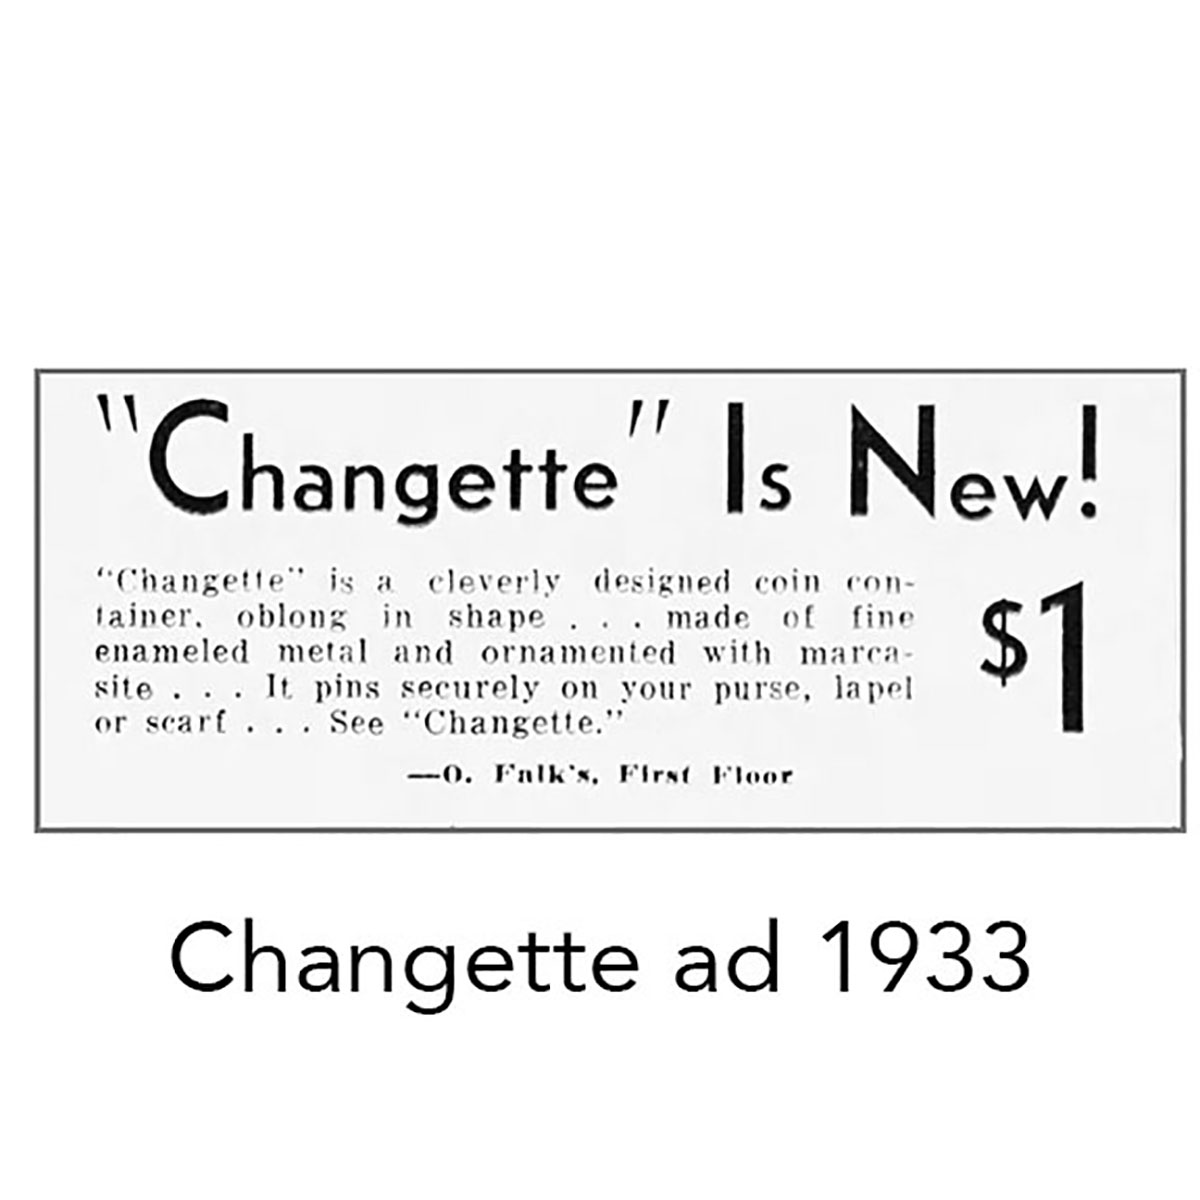 1930 jewelry ad